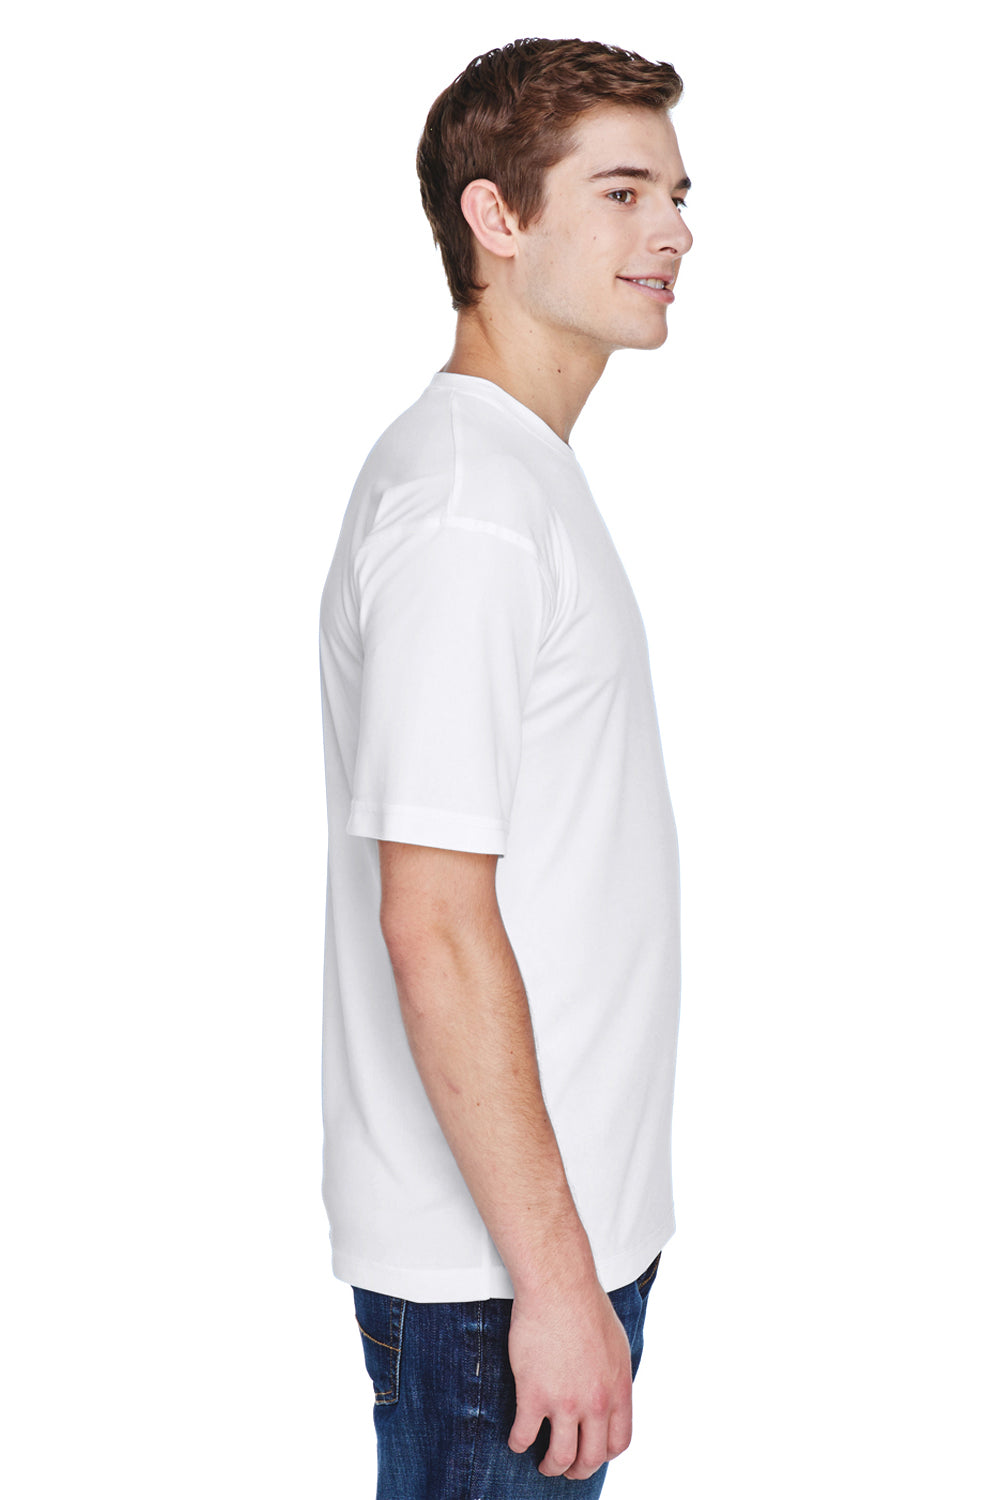 UltraClub 8620 Mens Cool & Dry Performance Moisture Wicking Short Sleeve Crewneck T-Shirt White Side